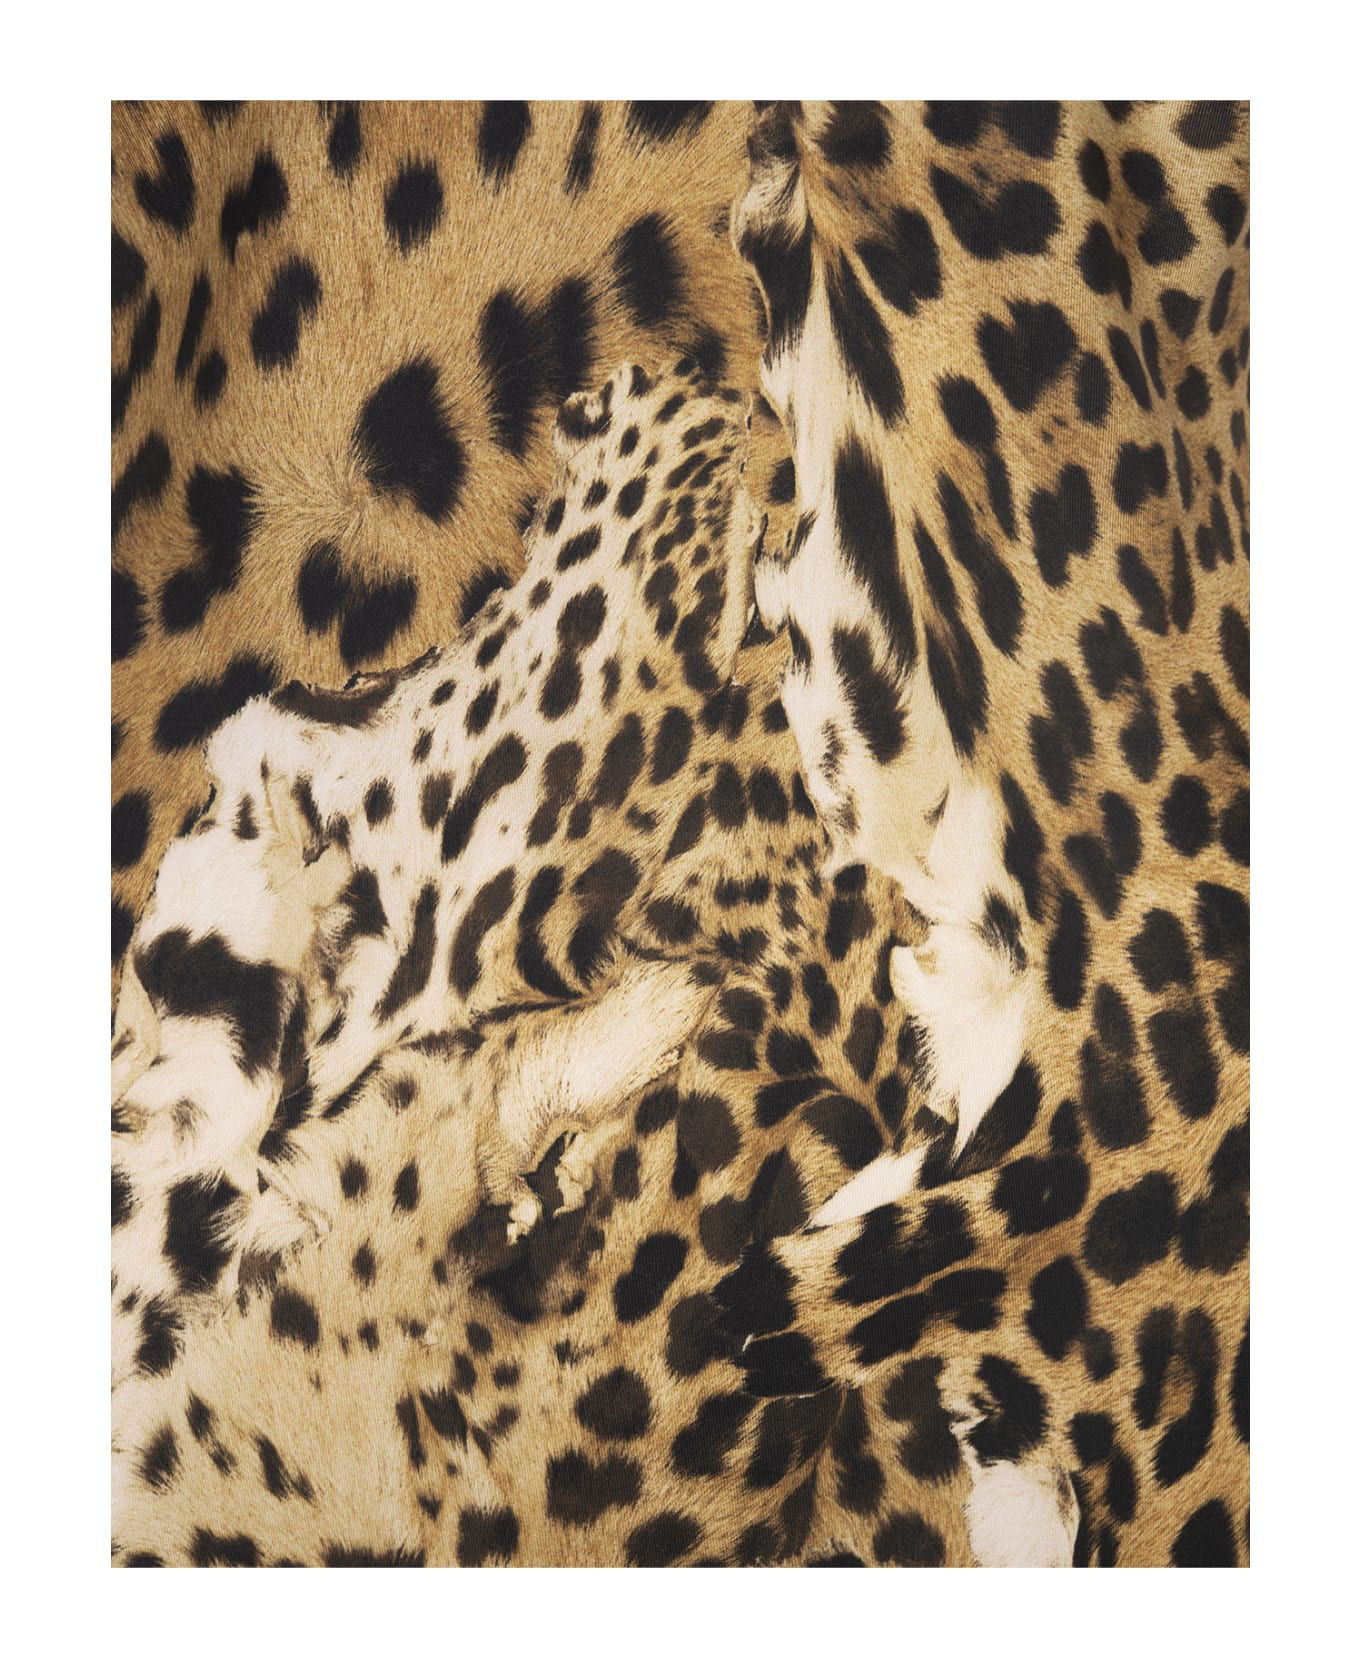 Roberto Cavalli Lingerie Dress With Leopard Print - Naturale